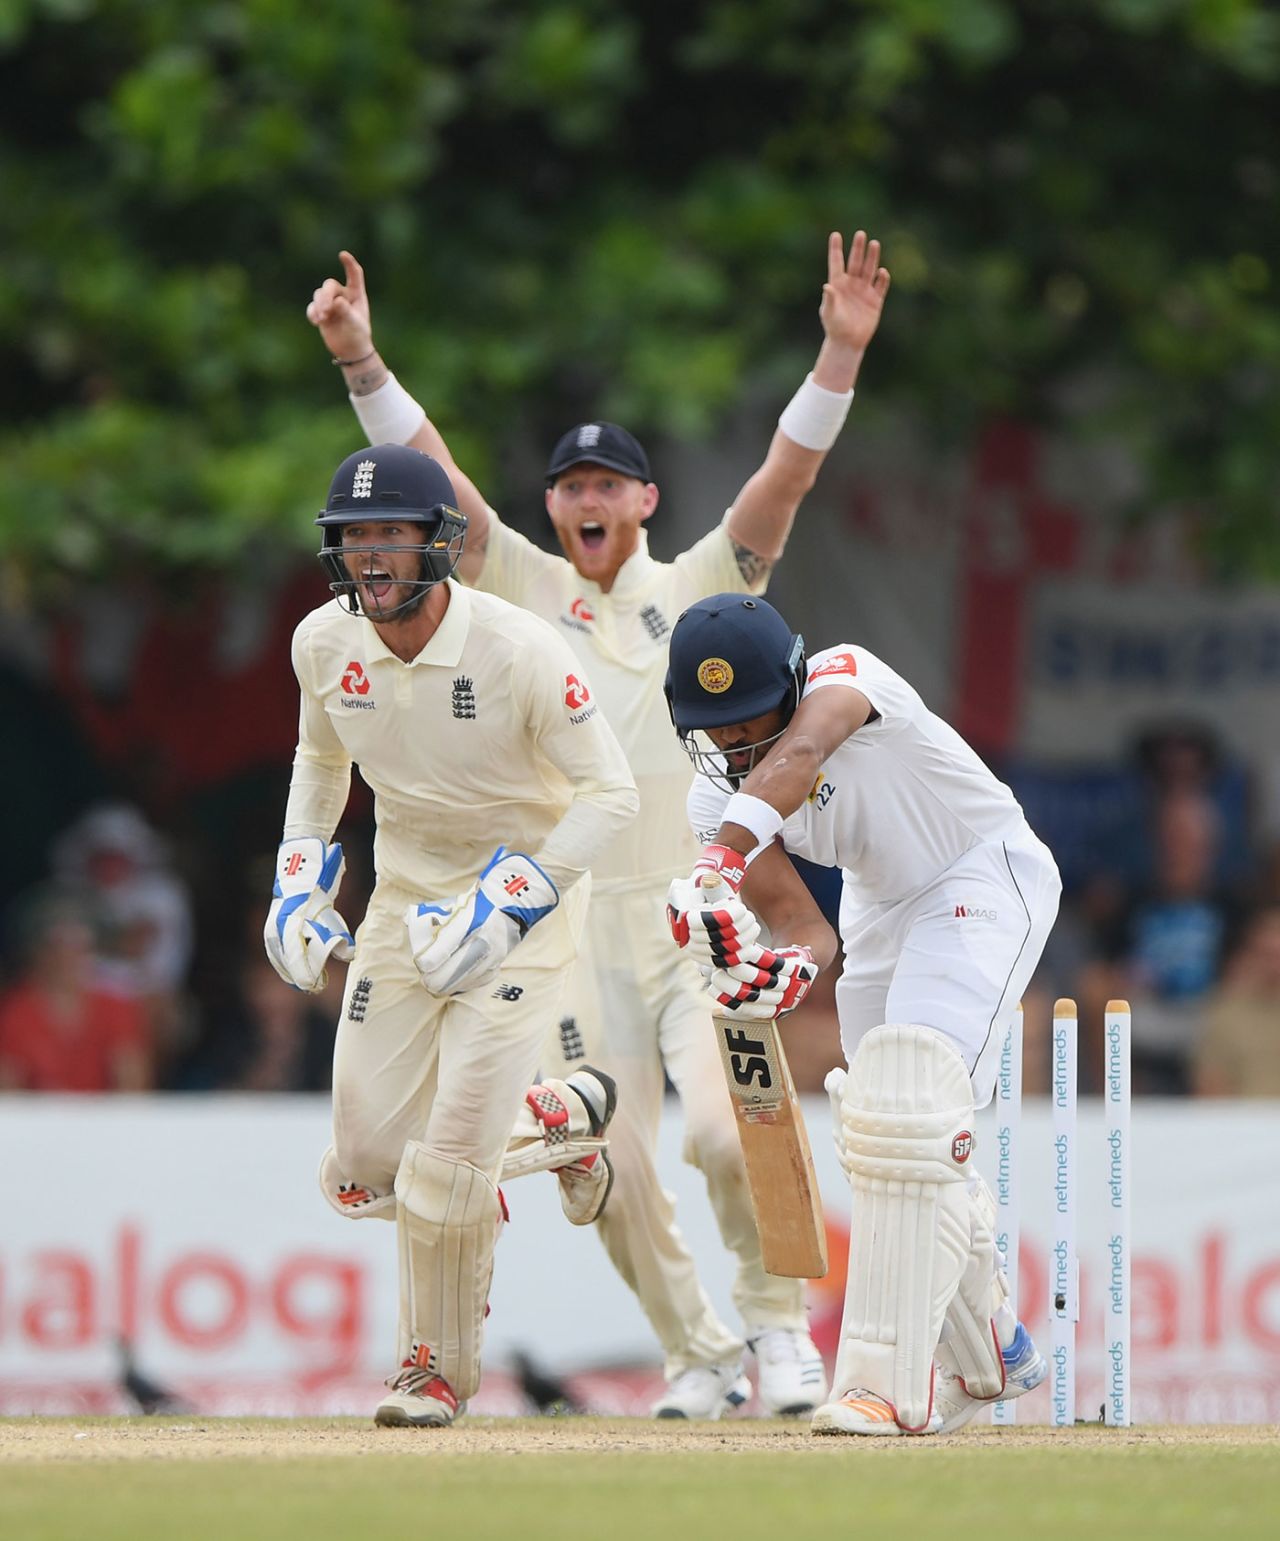 England celebrate as Dinesh Chandimal is bowled by Jack Leach, Sri Lanka v England, 1st Test, 4th day, Galle, November 9, 2018